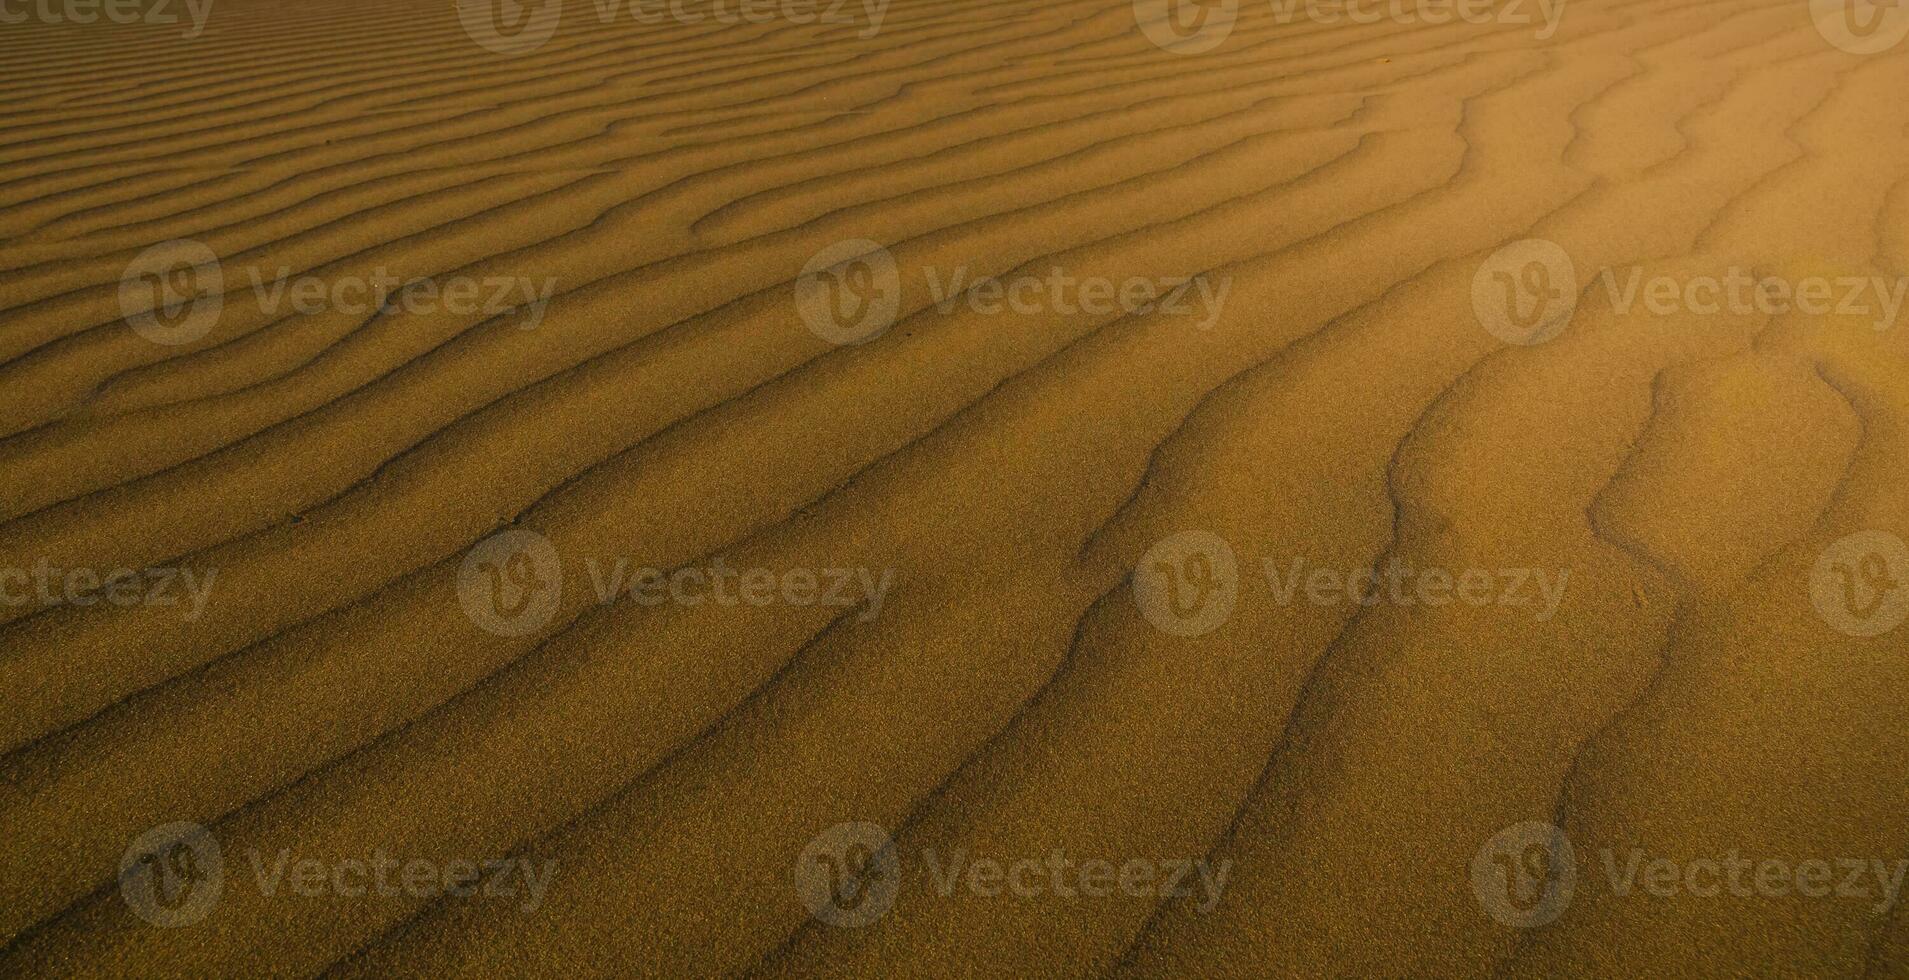 sabbia dune nel las pampa, argentina foto